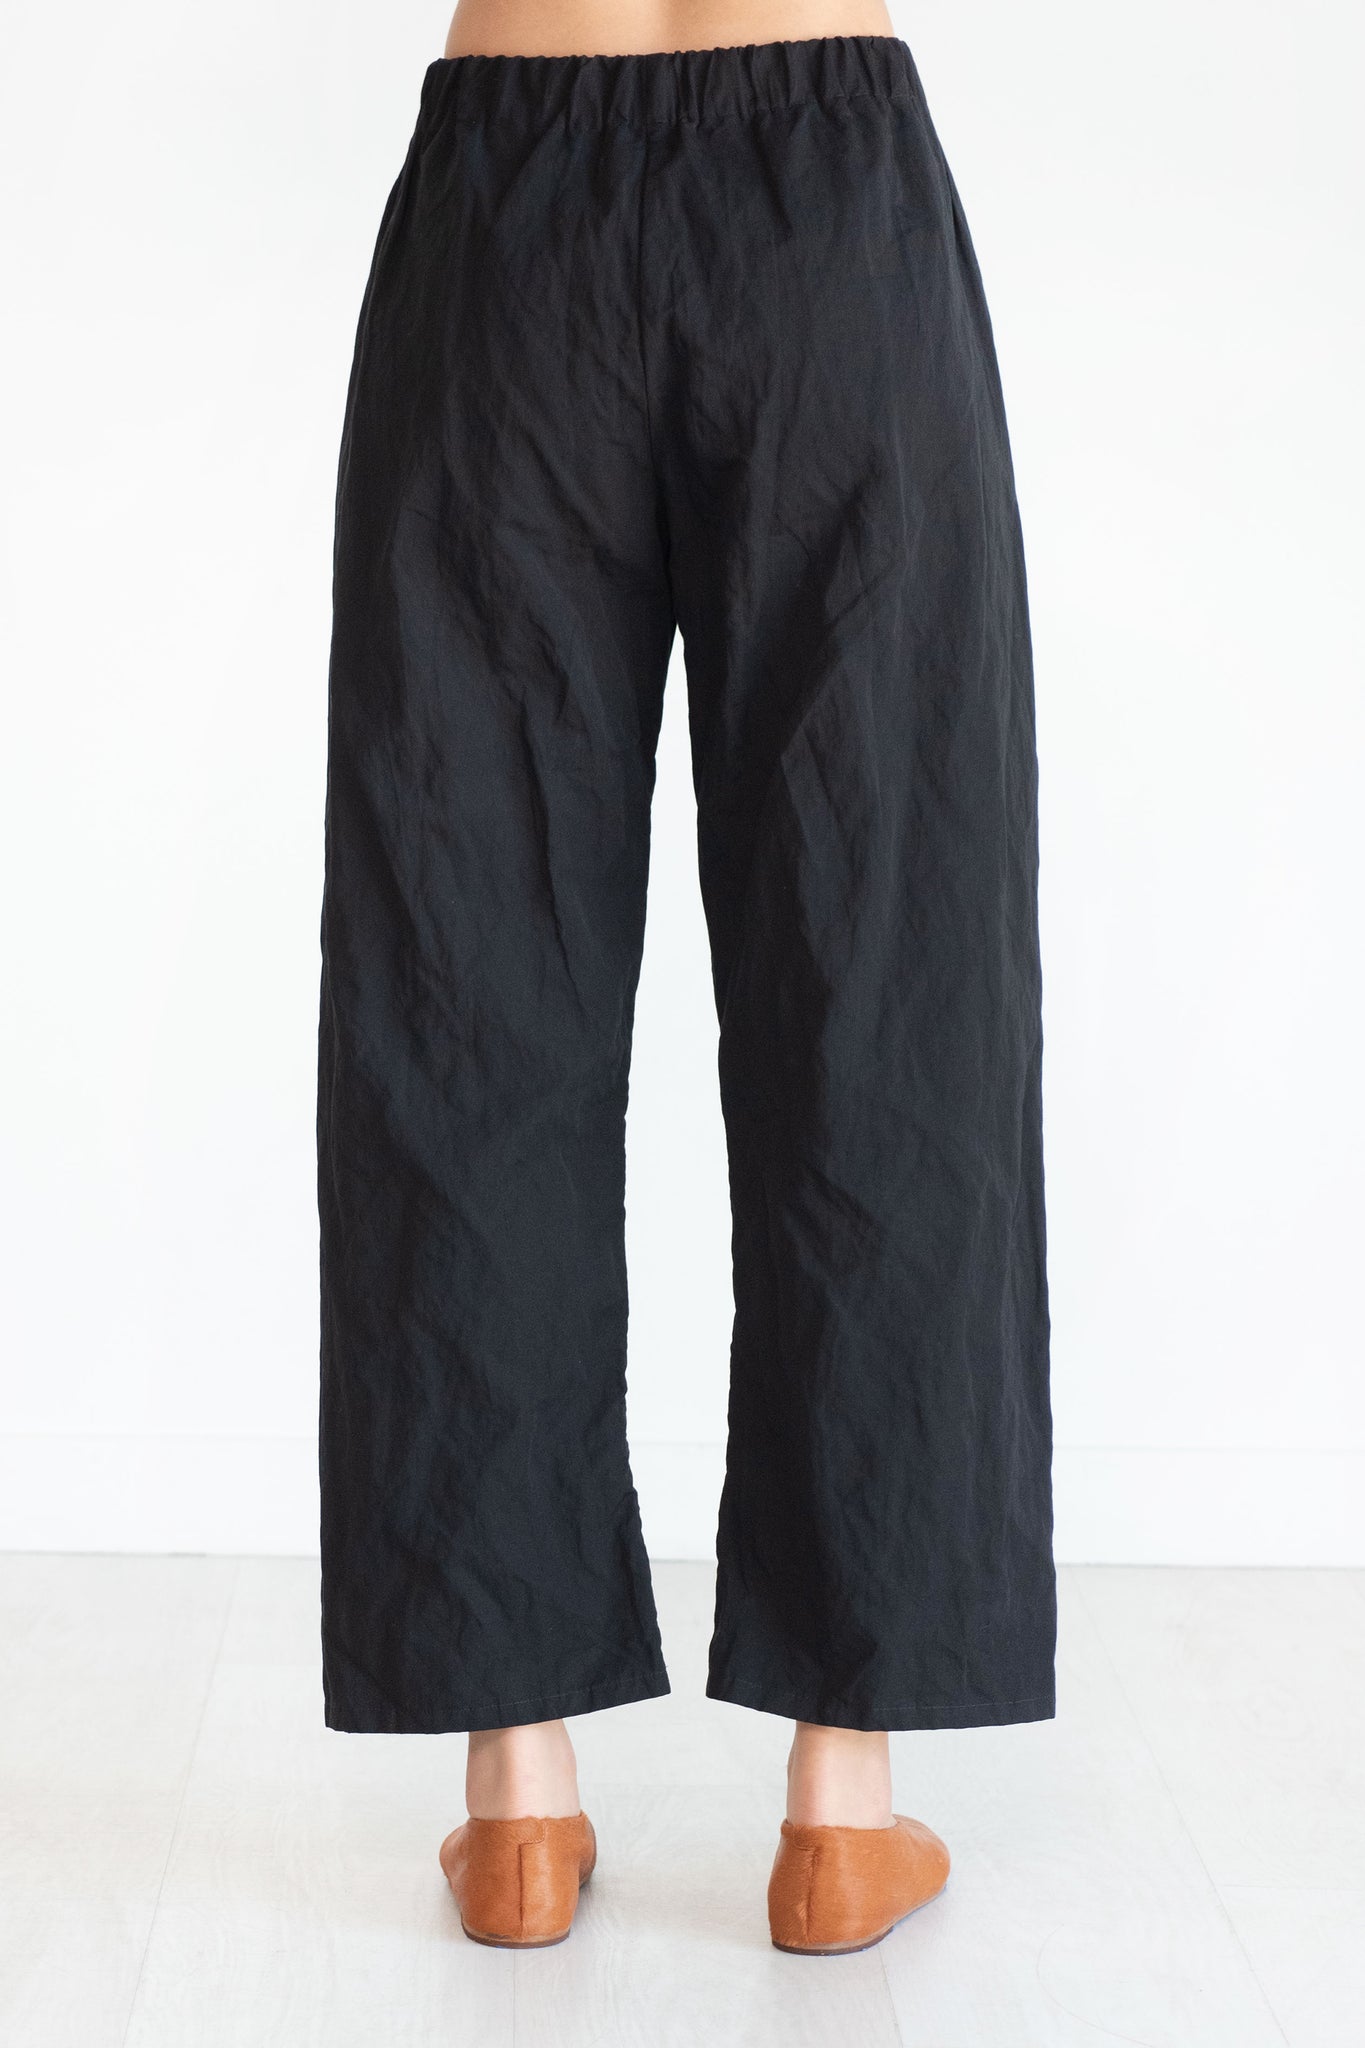 APUNTOB - Copy of P1382/ts733 - Cotton Crinkle Trousers